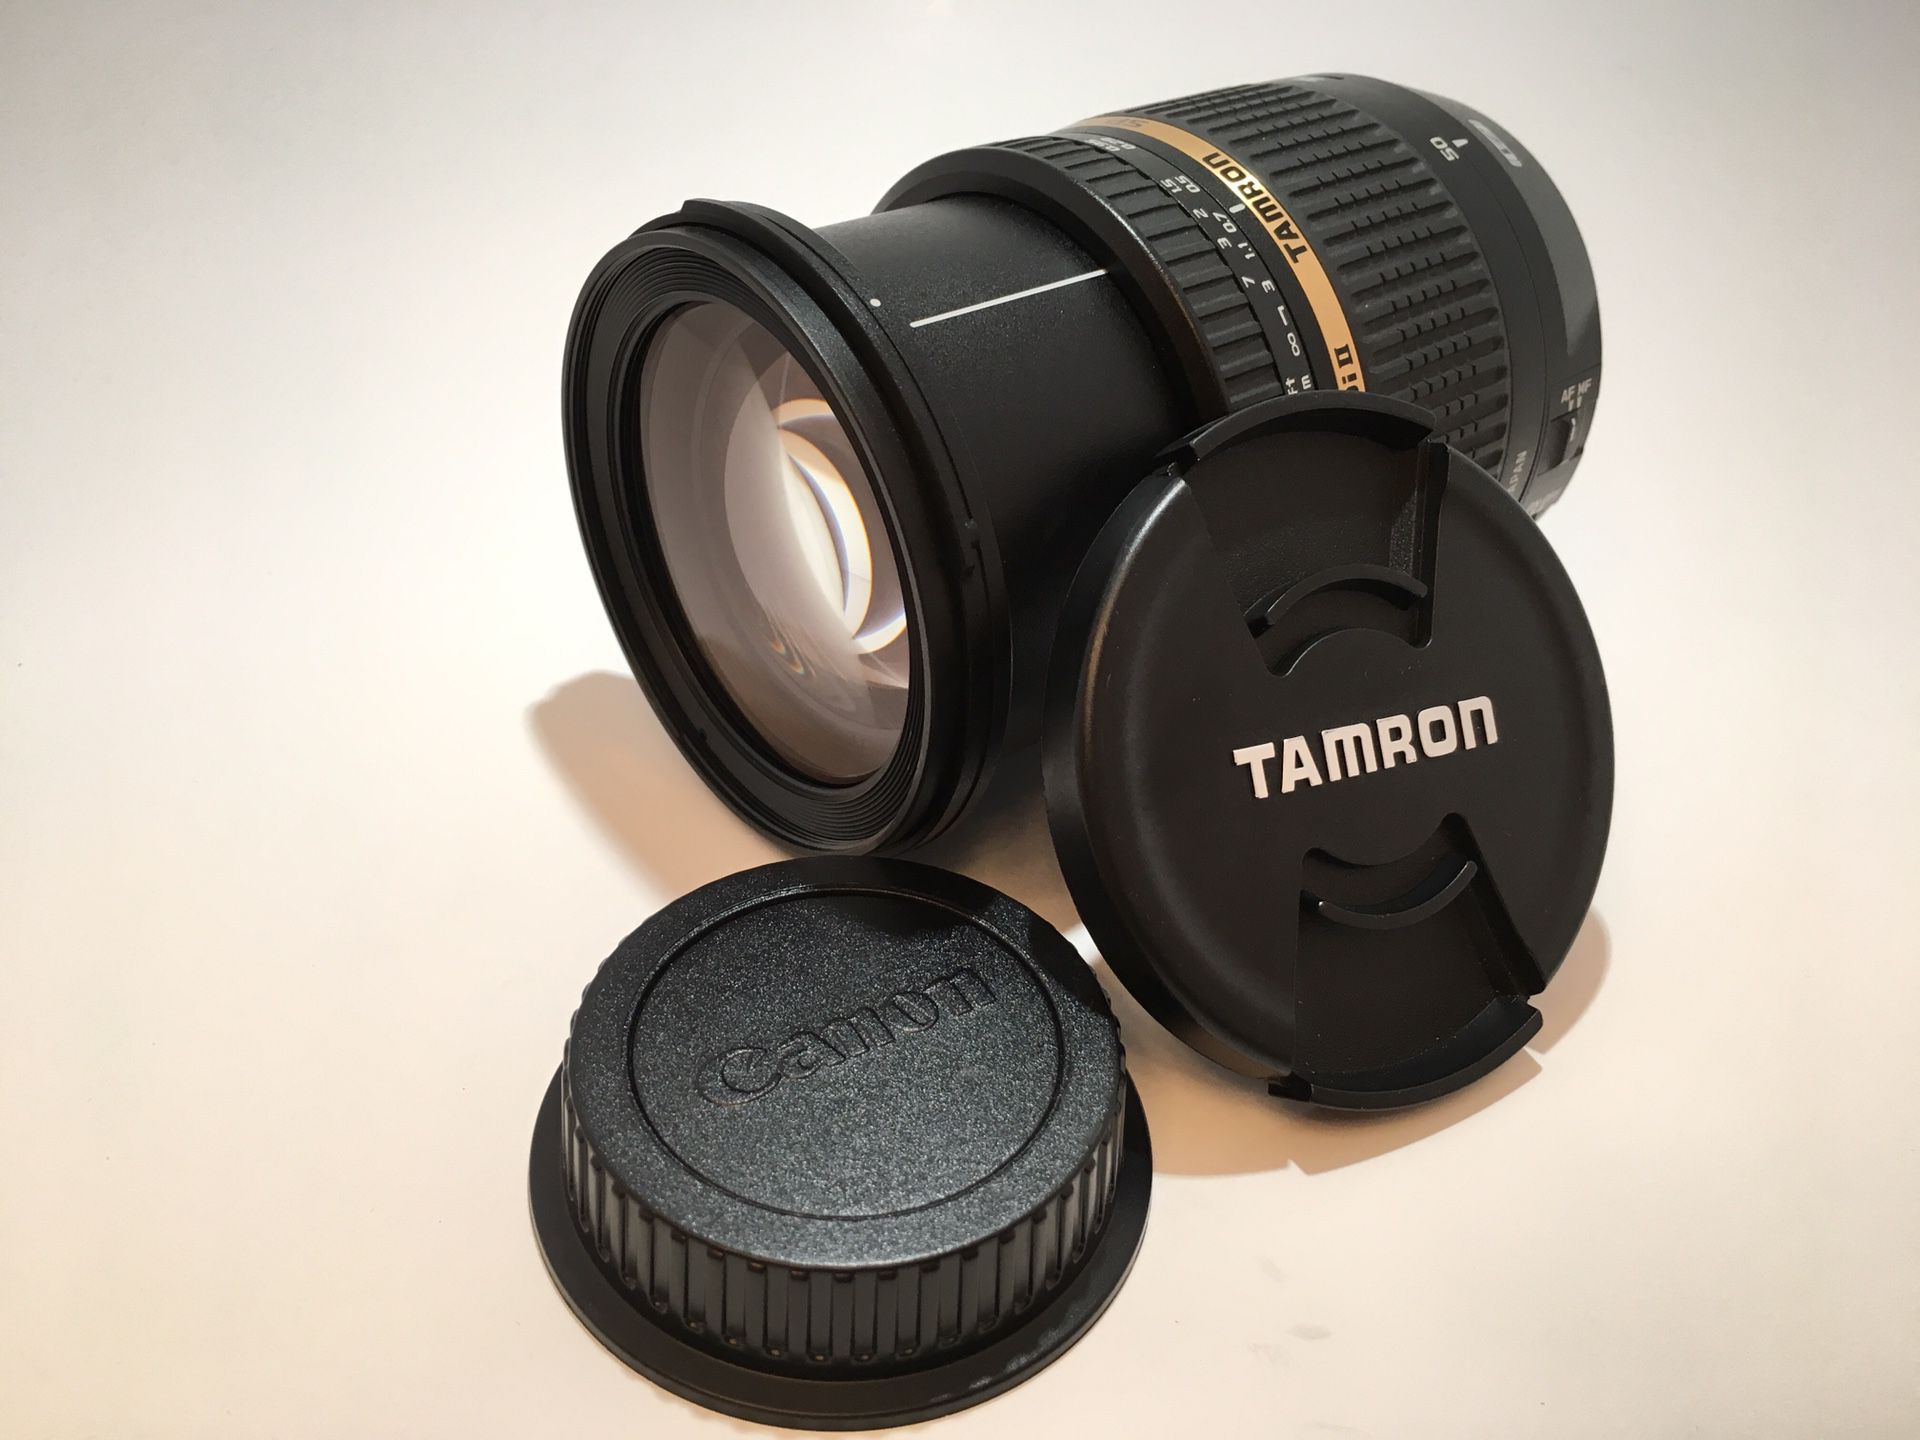 Tamron SP 17-50mm f/2.8 Di II VC B005 (for Canon)